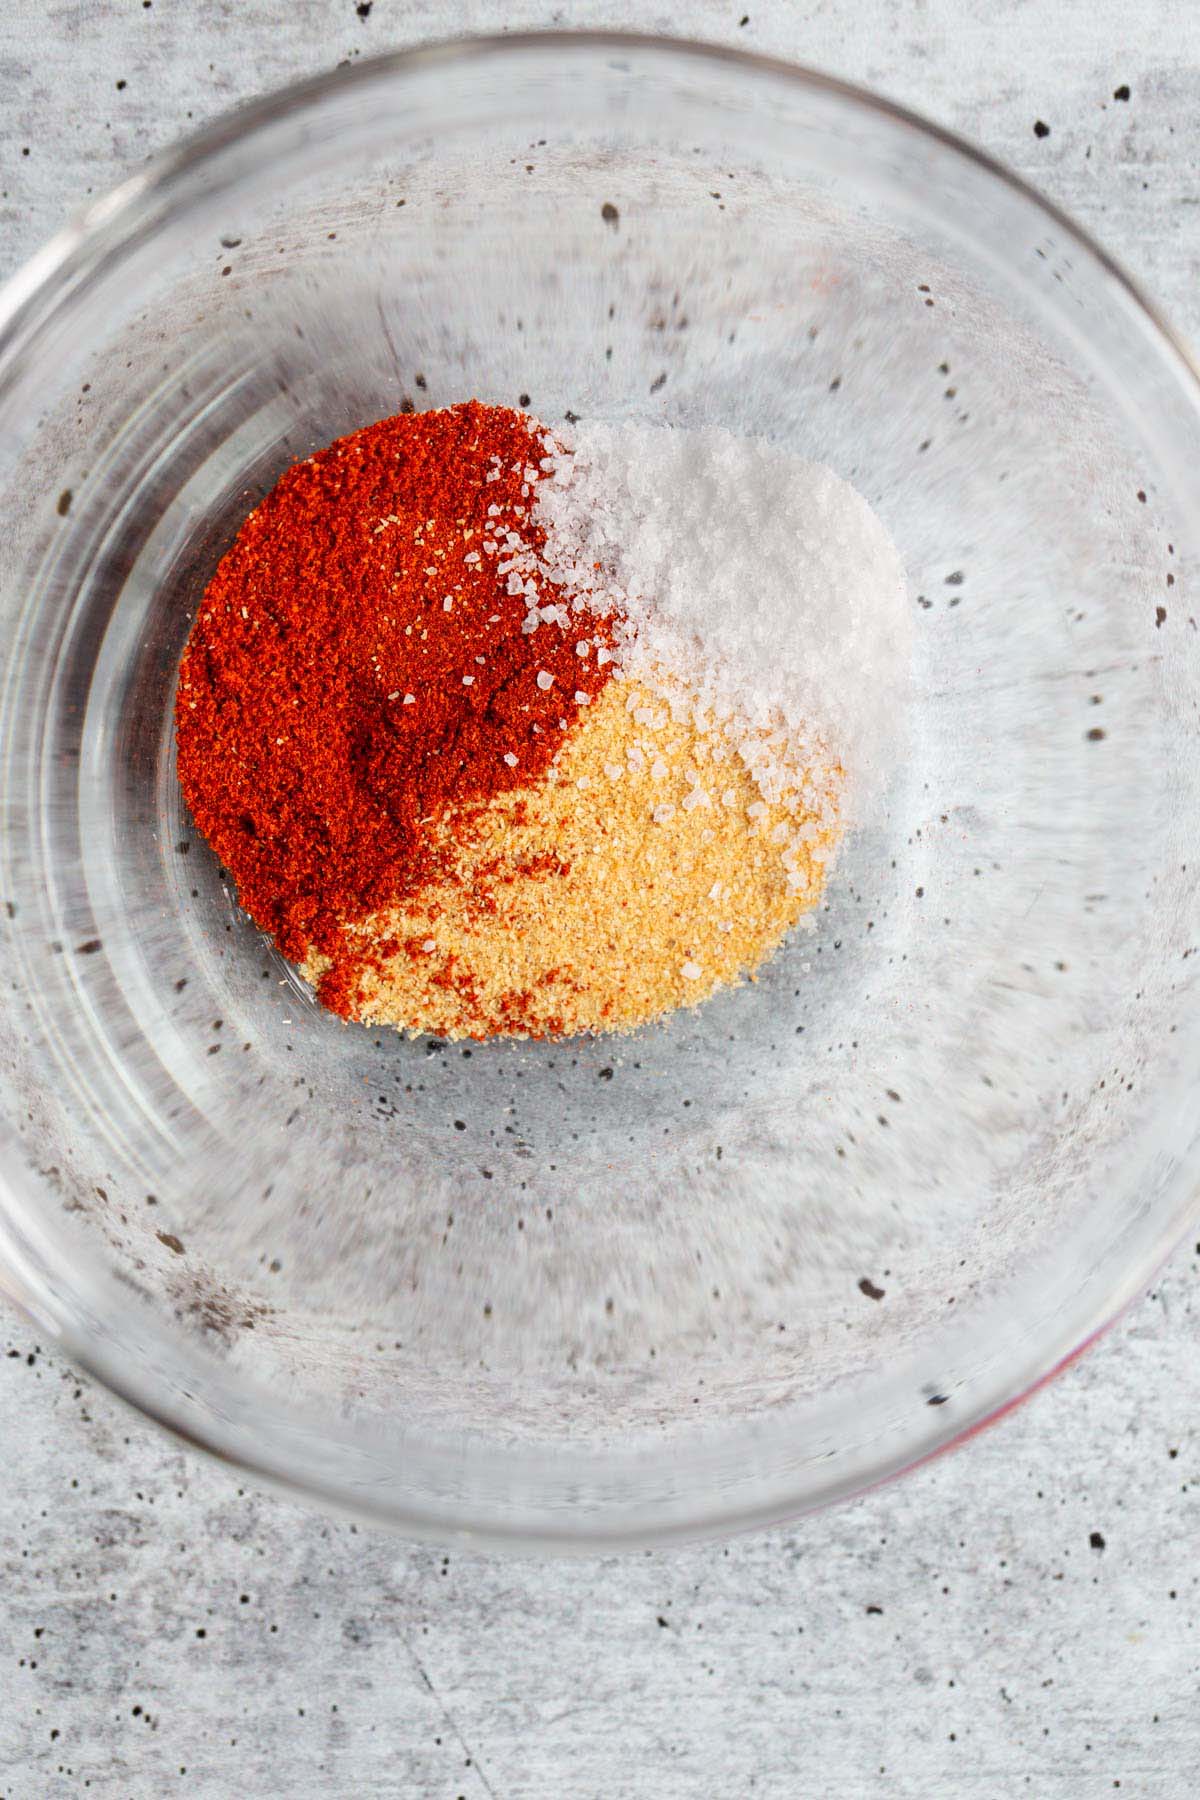 Smoked paprika, garlic powder, and salt in a glass bowl.